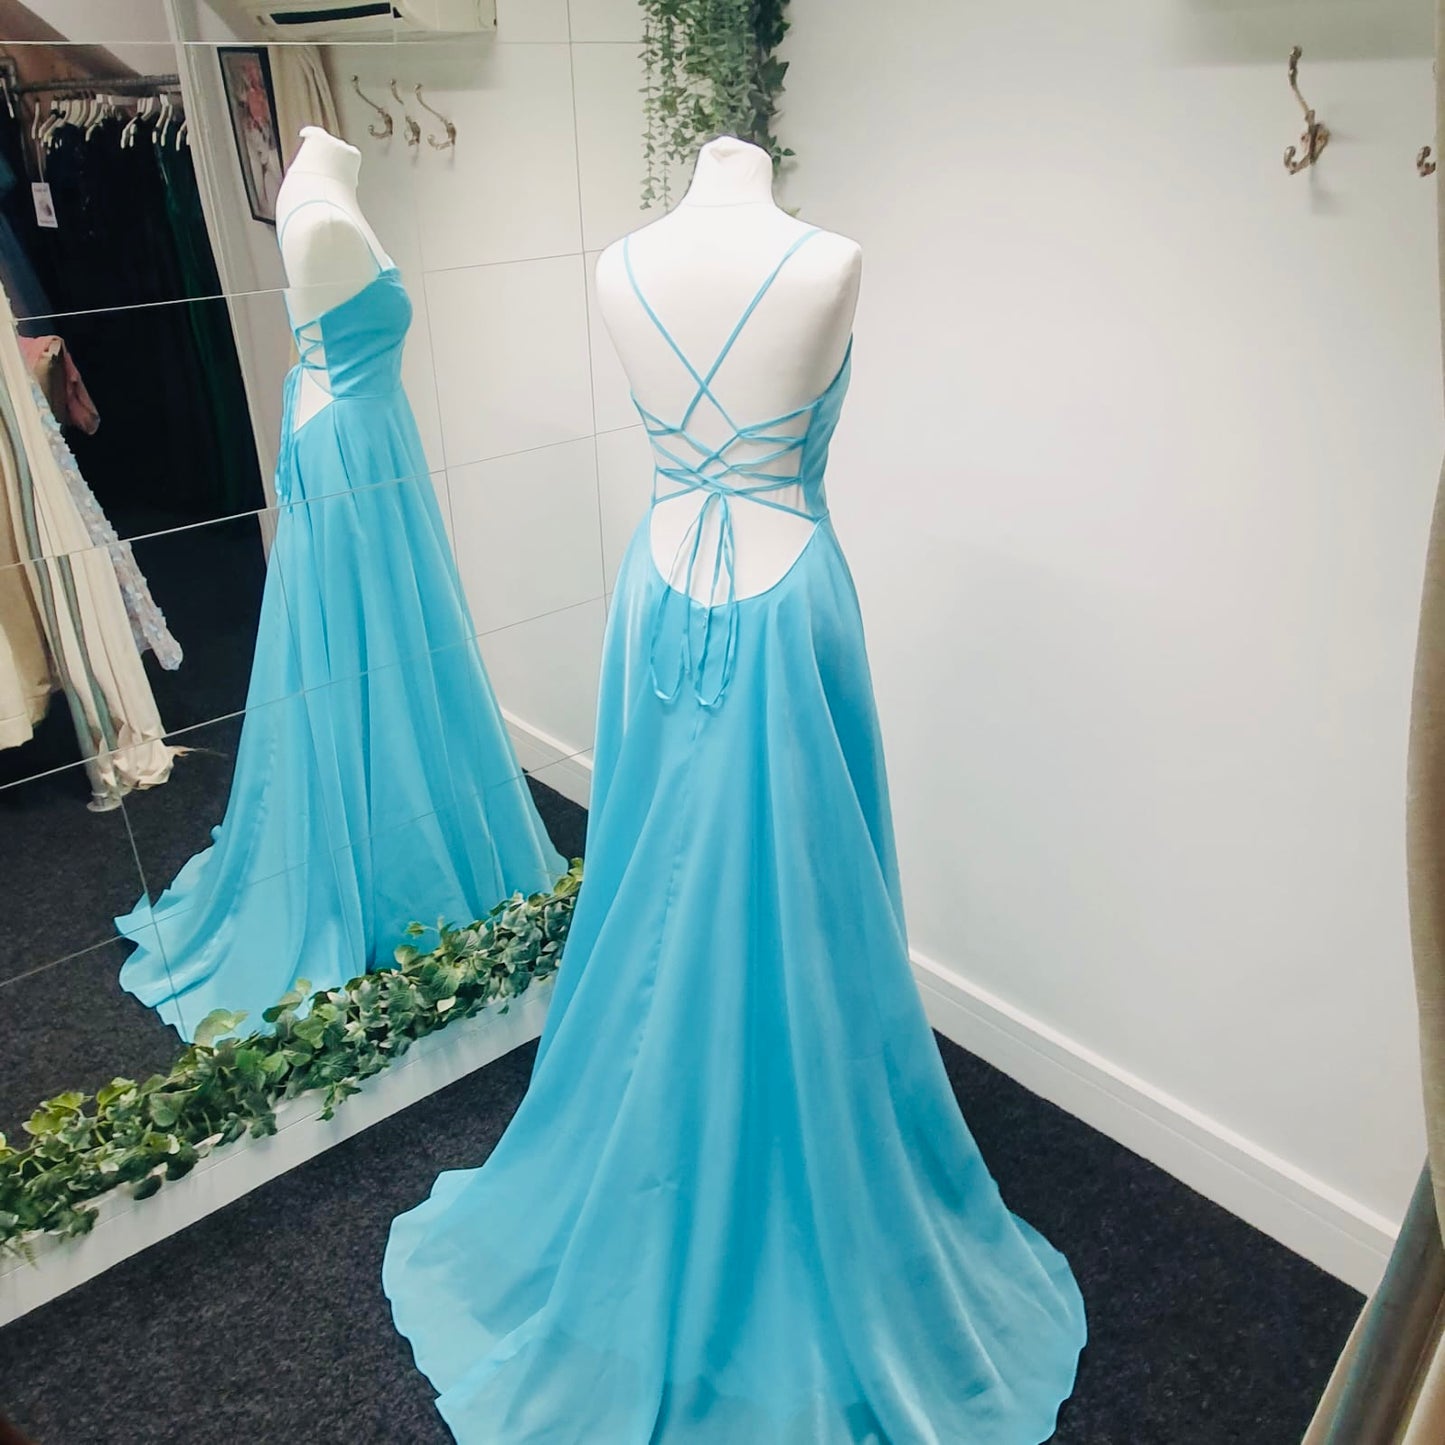 Blue Princess Prom Dress - size 8